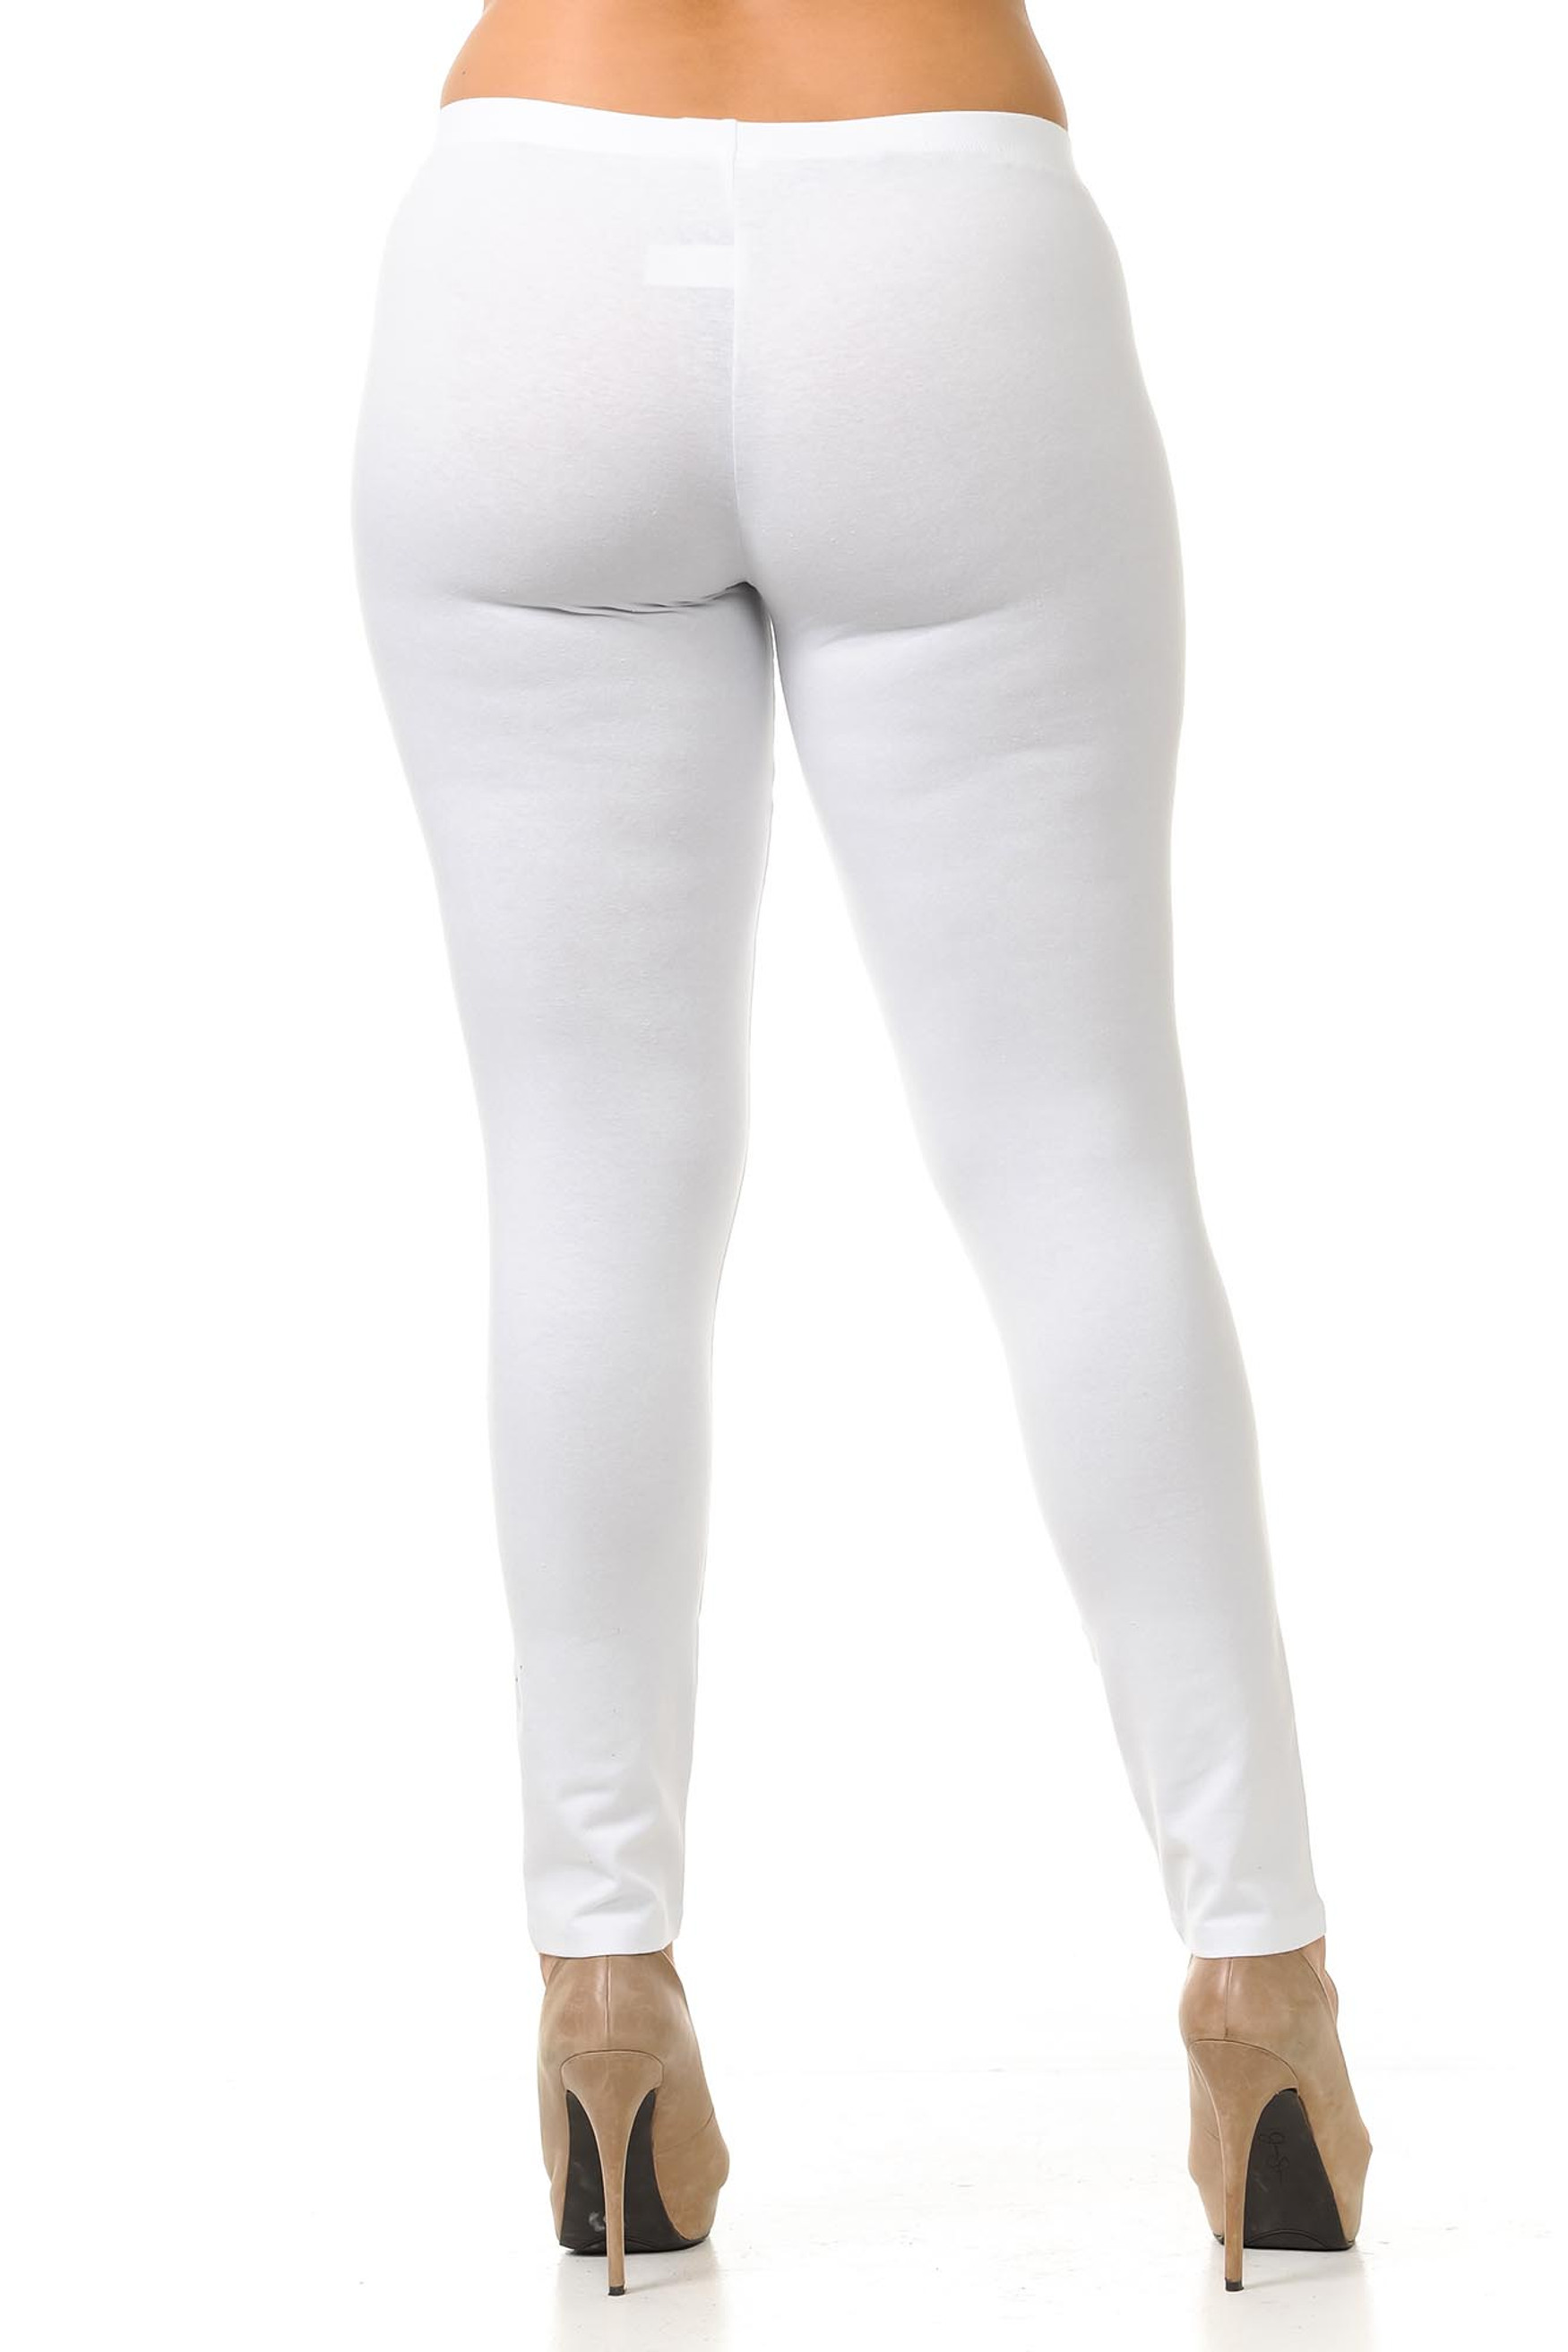 Rear view image of White USA Cotton Full Length Leggings - Plus Size 